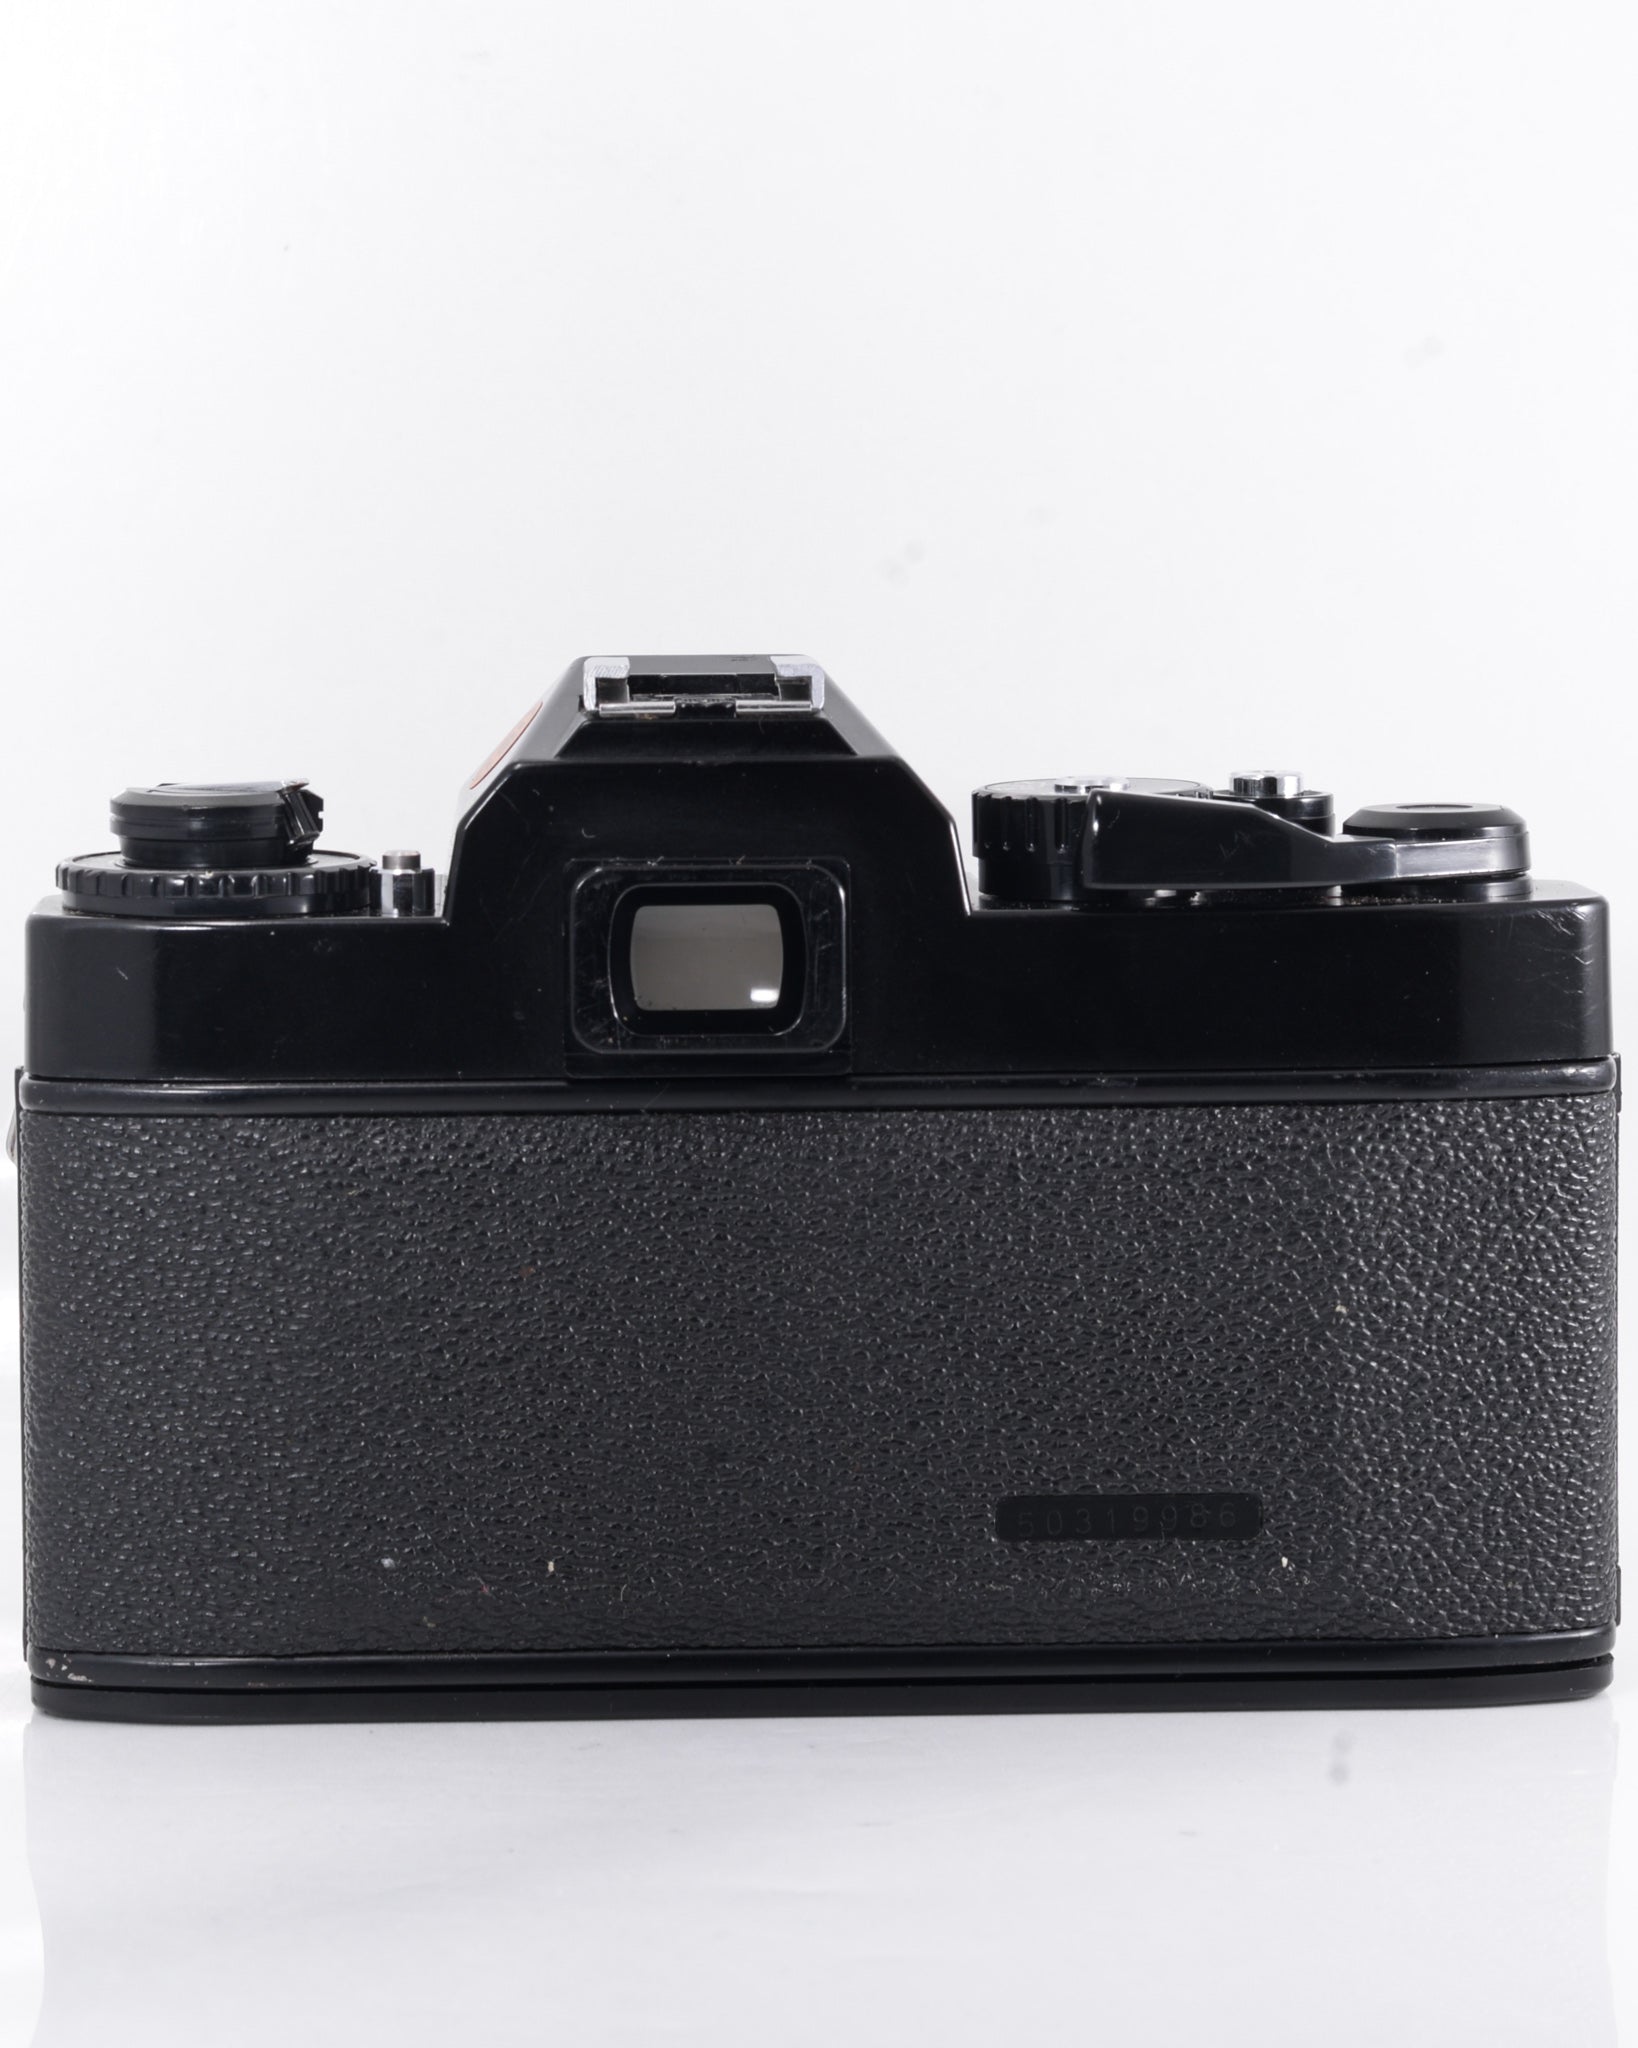 Ricoh KR-5 35mm SLR film camera with 28mm f2.8 lens